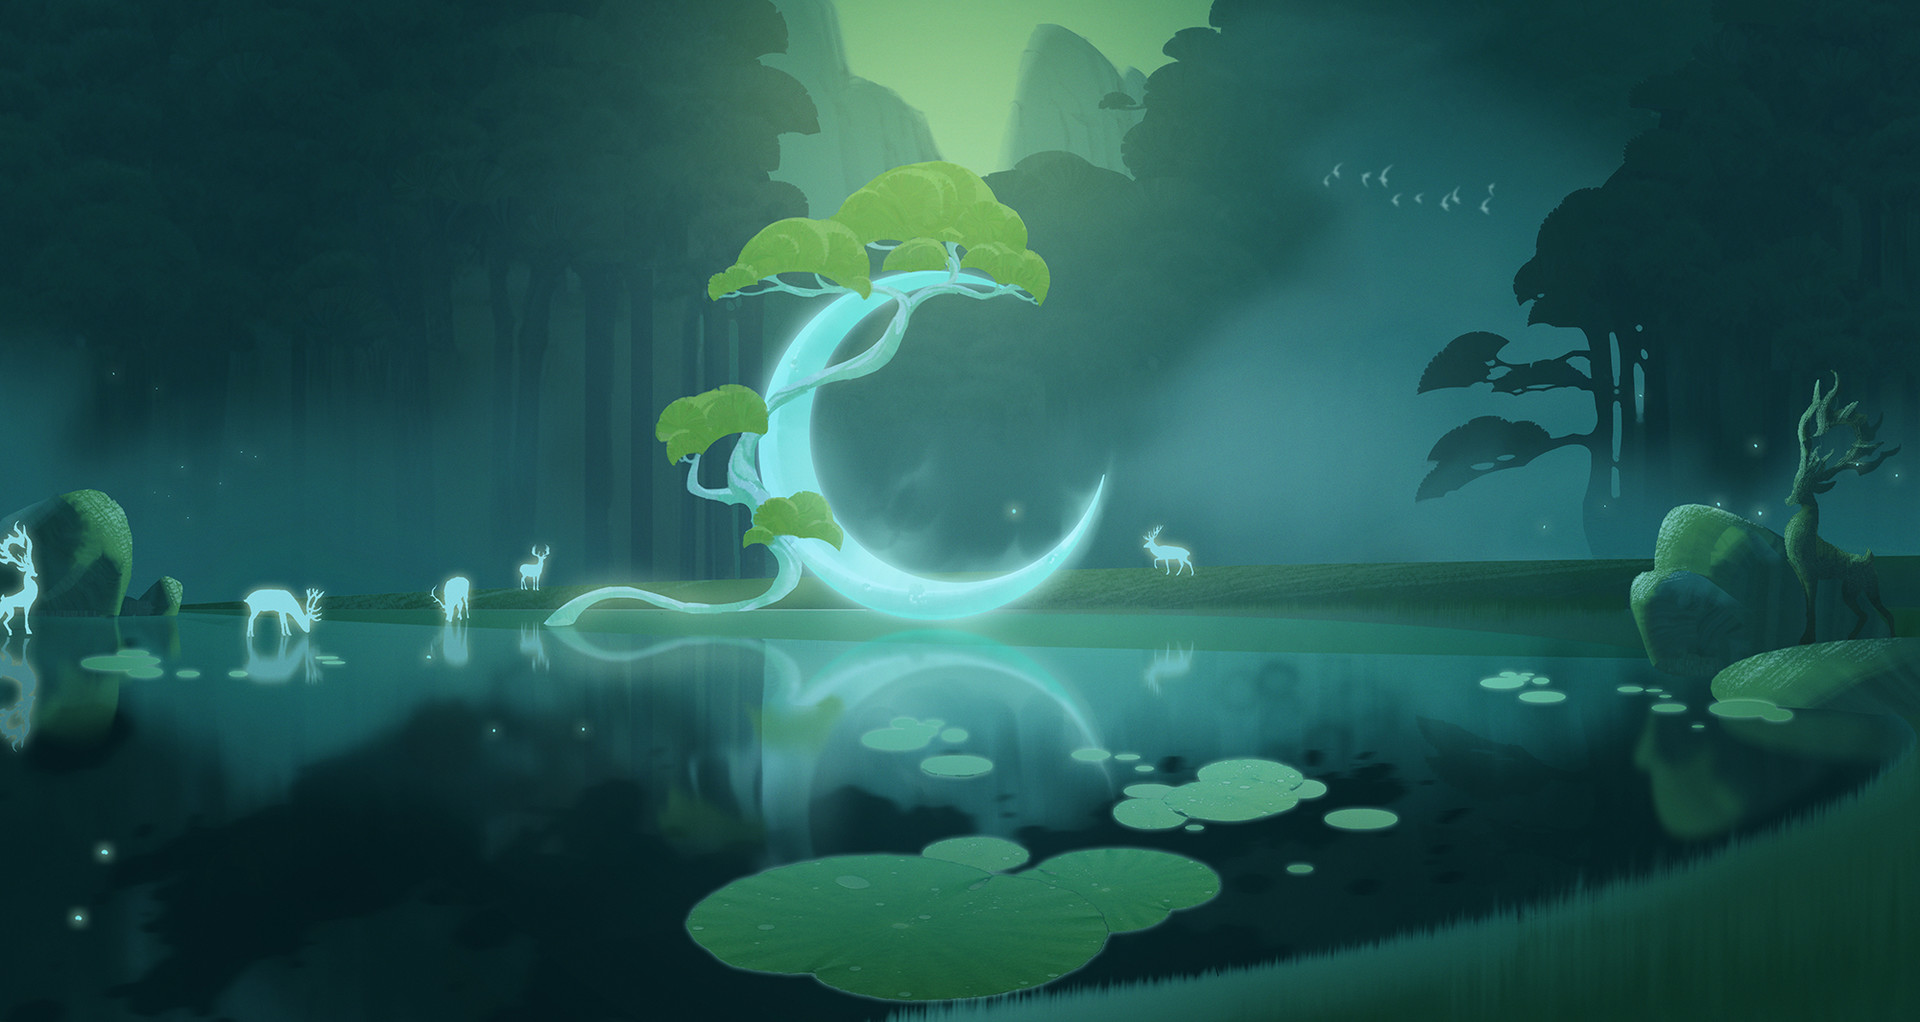 Qian Wei Digital Art Fantasy Art Deer Lake Forest Lily Pads Trees Crescent Moon Reflection 1920x1022